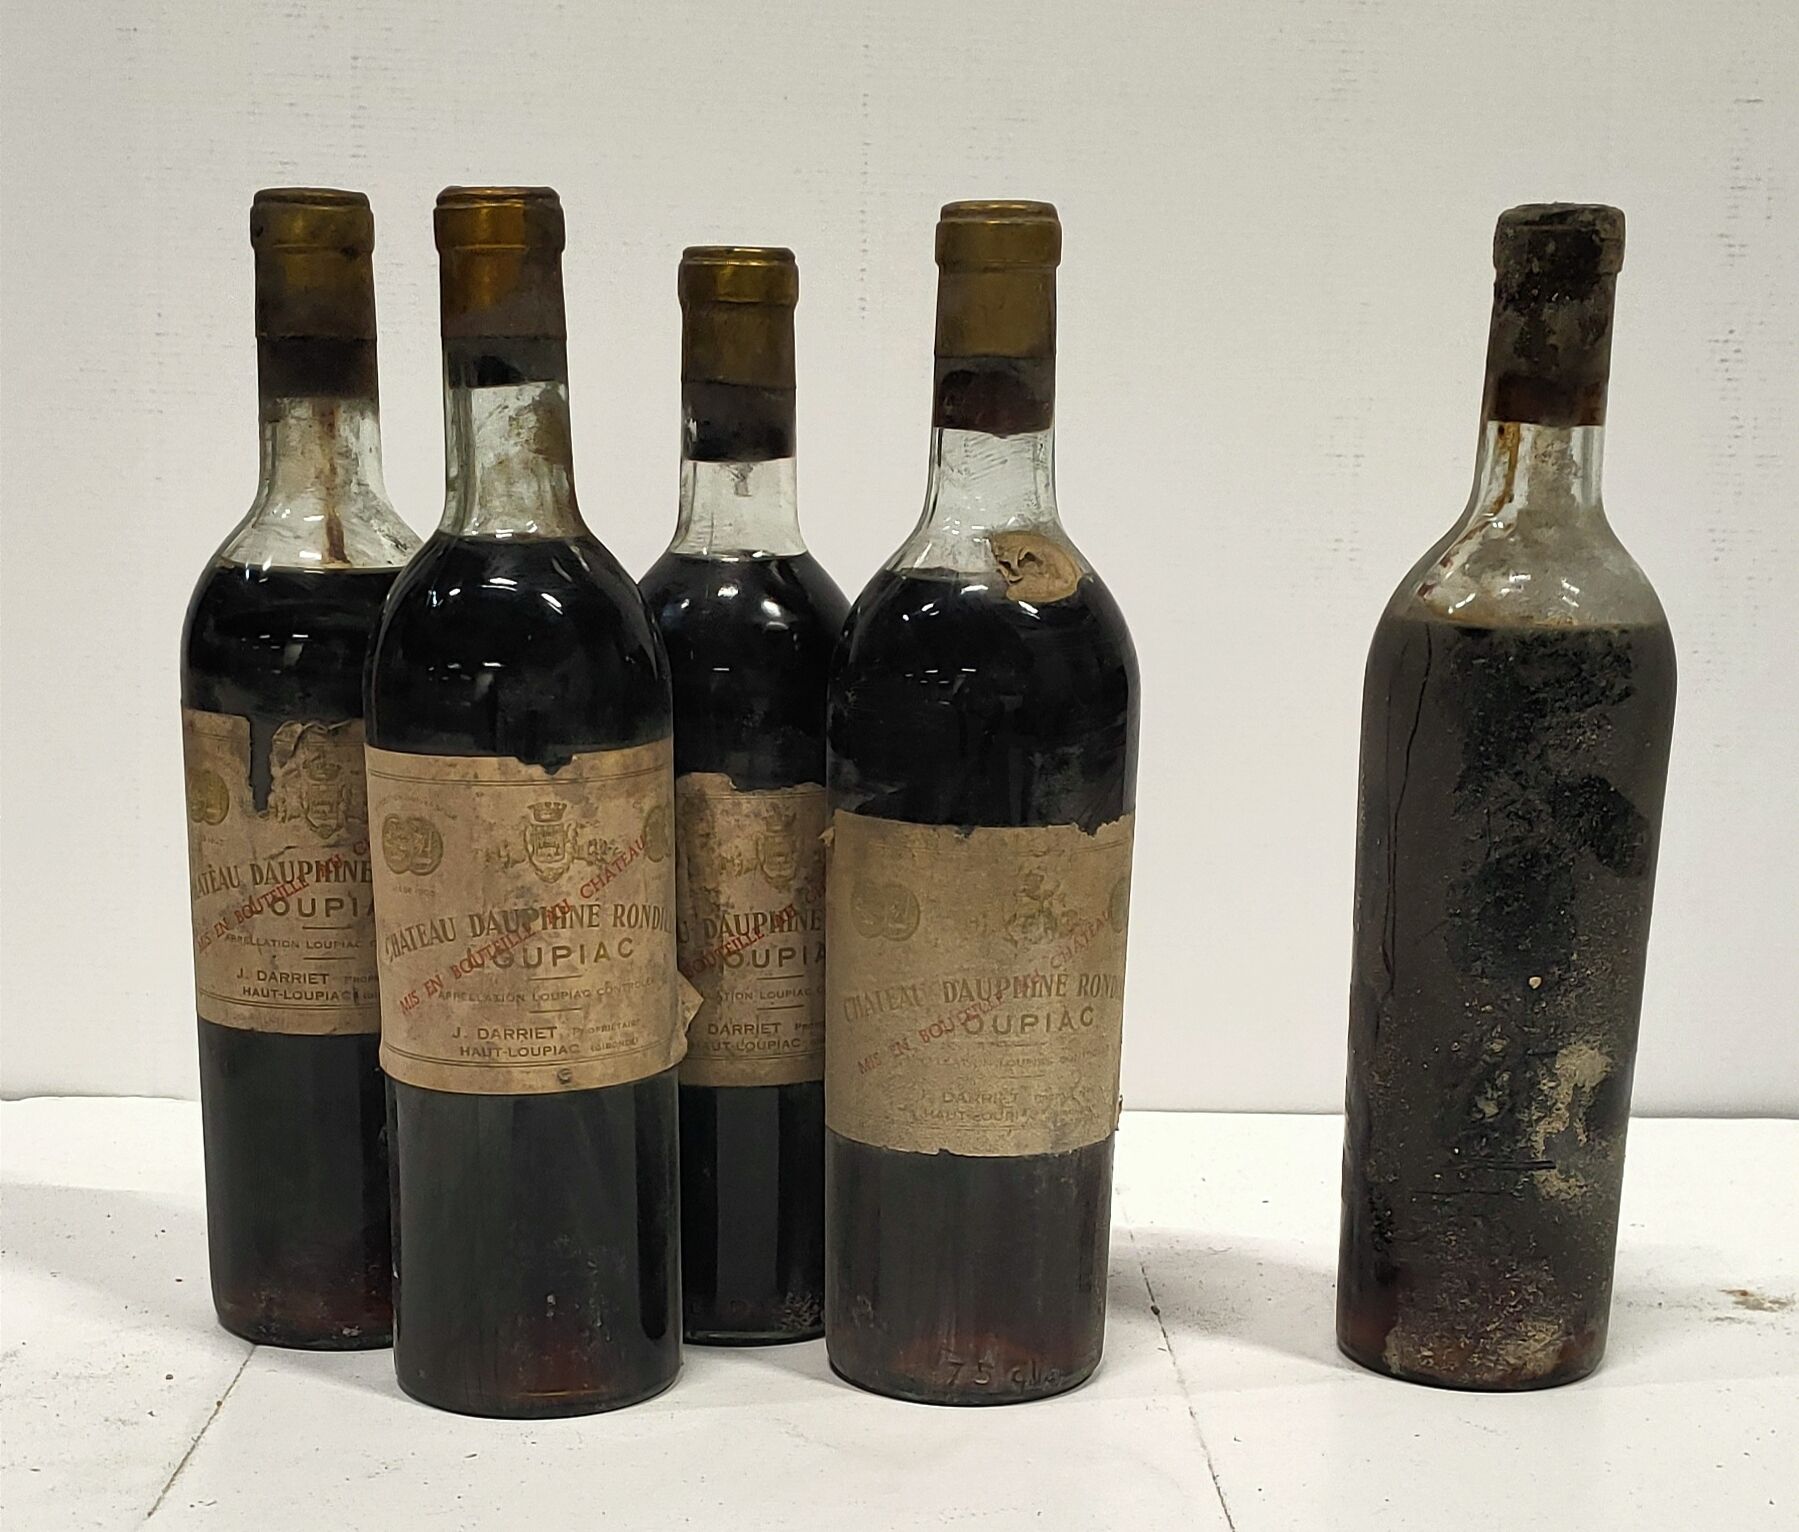 Null 5瓶

4 DAUPHINE RONDILLON酒庄 - Loupiac。

附带一个没有标签的瓶子

1956

(只剩下一个年份的标签，其他都是推&hellip;